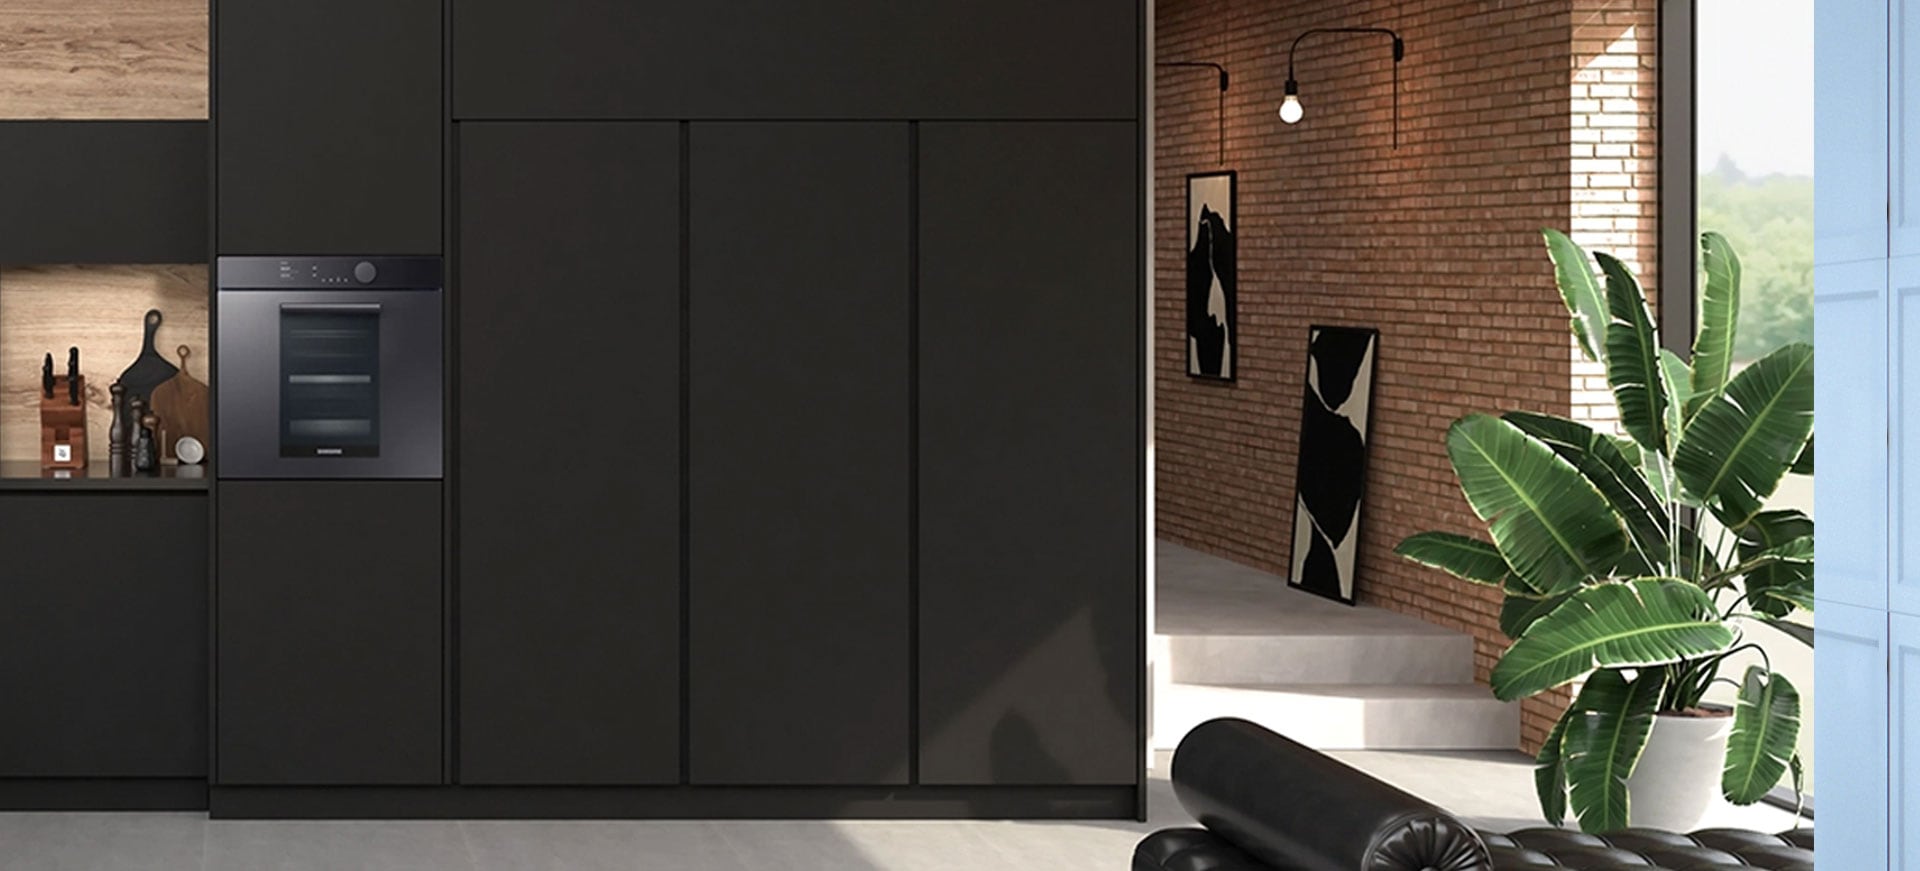 Samsung Bespoke Refrigerator Loft Black
